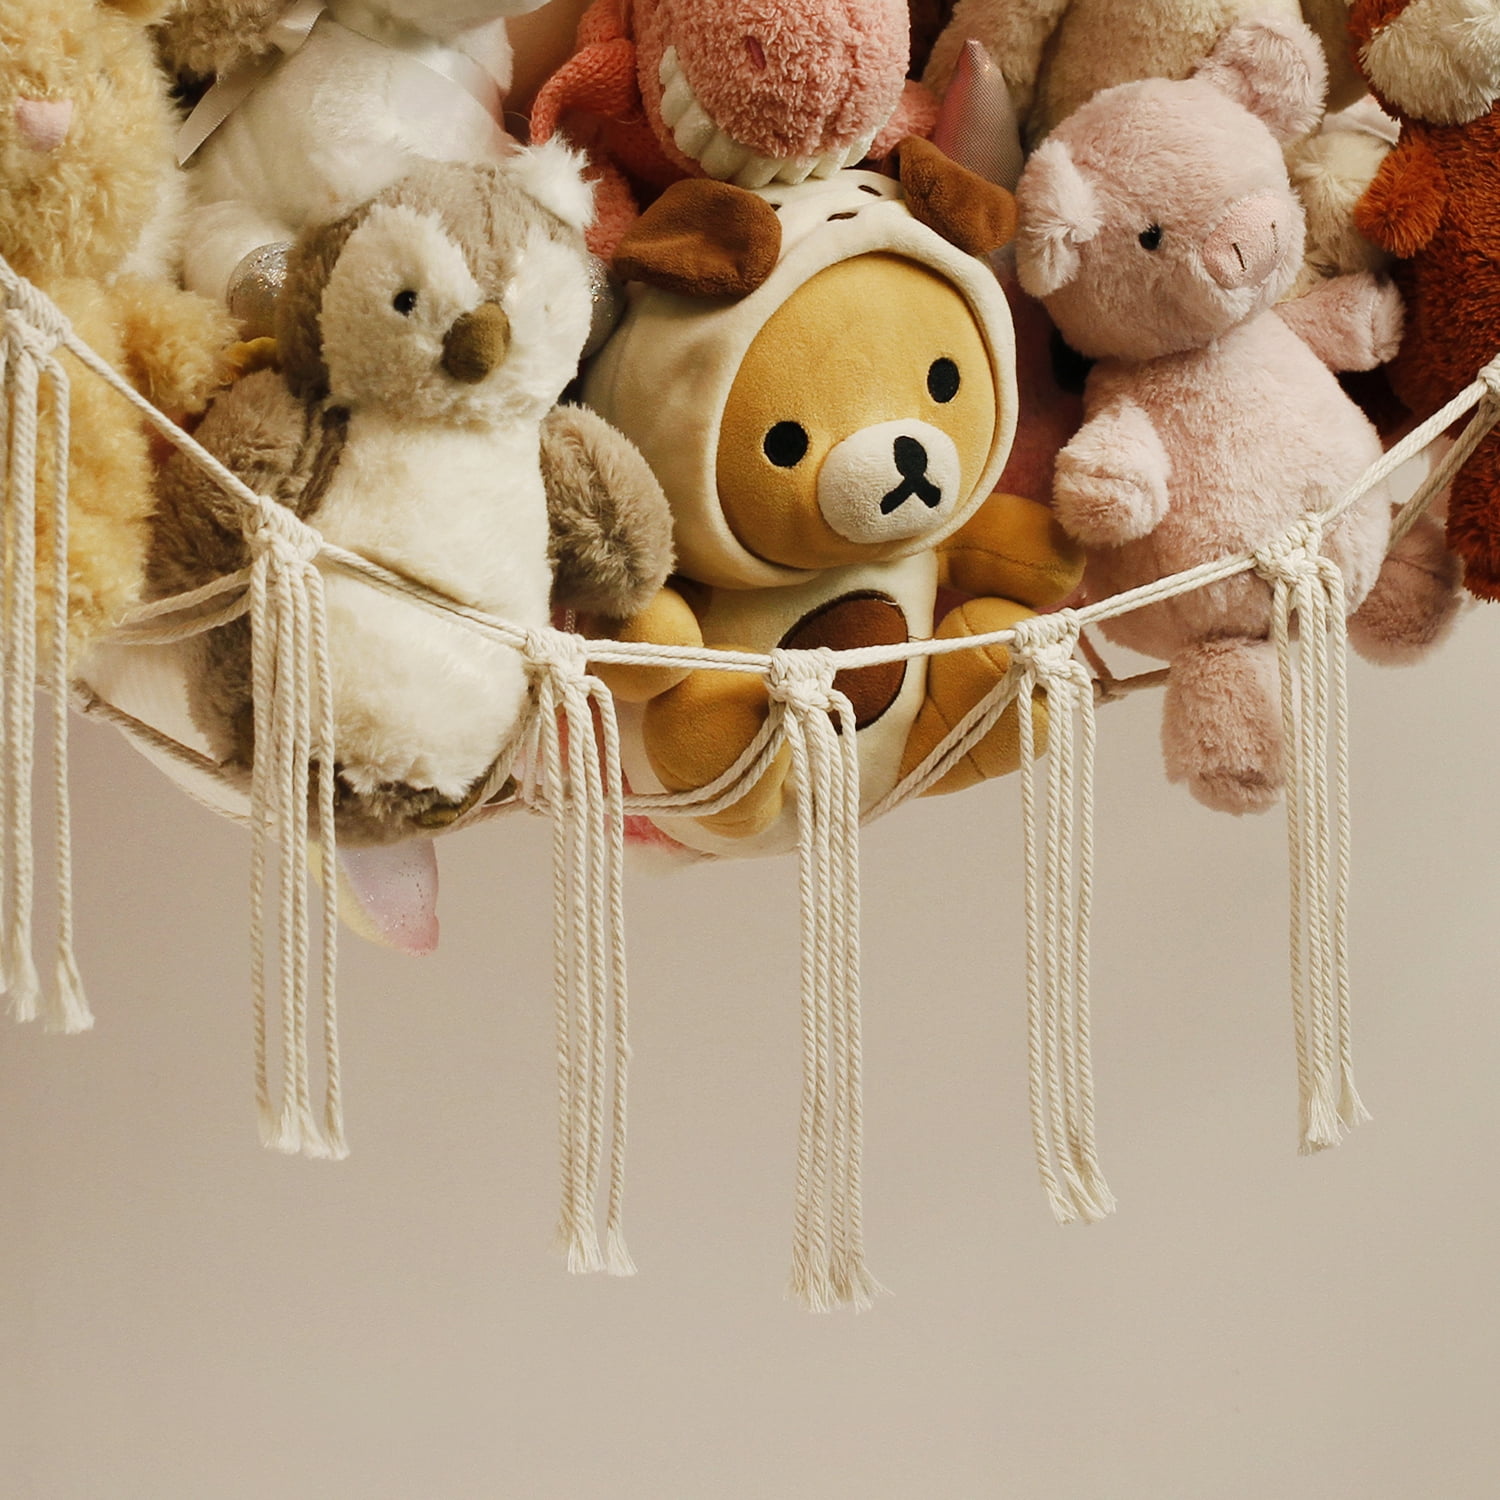 Stuffed Animal Storage Hammock or Net - Toy Hammock Net for